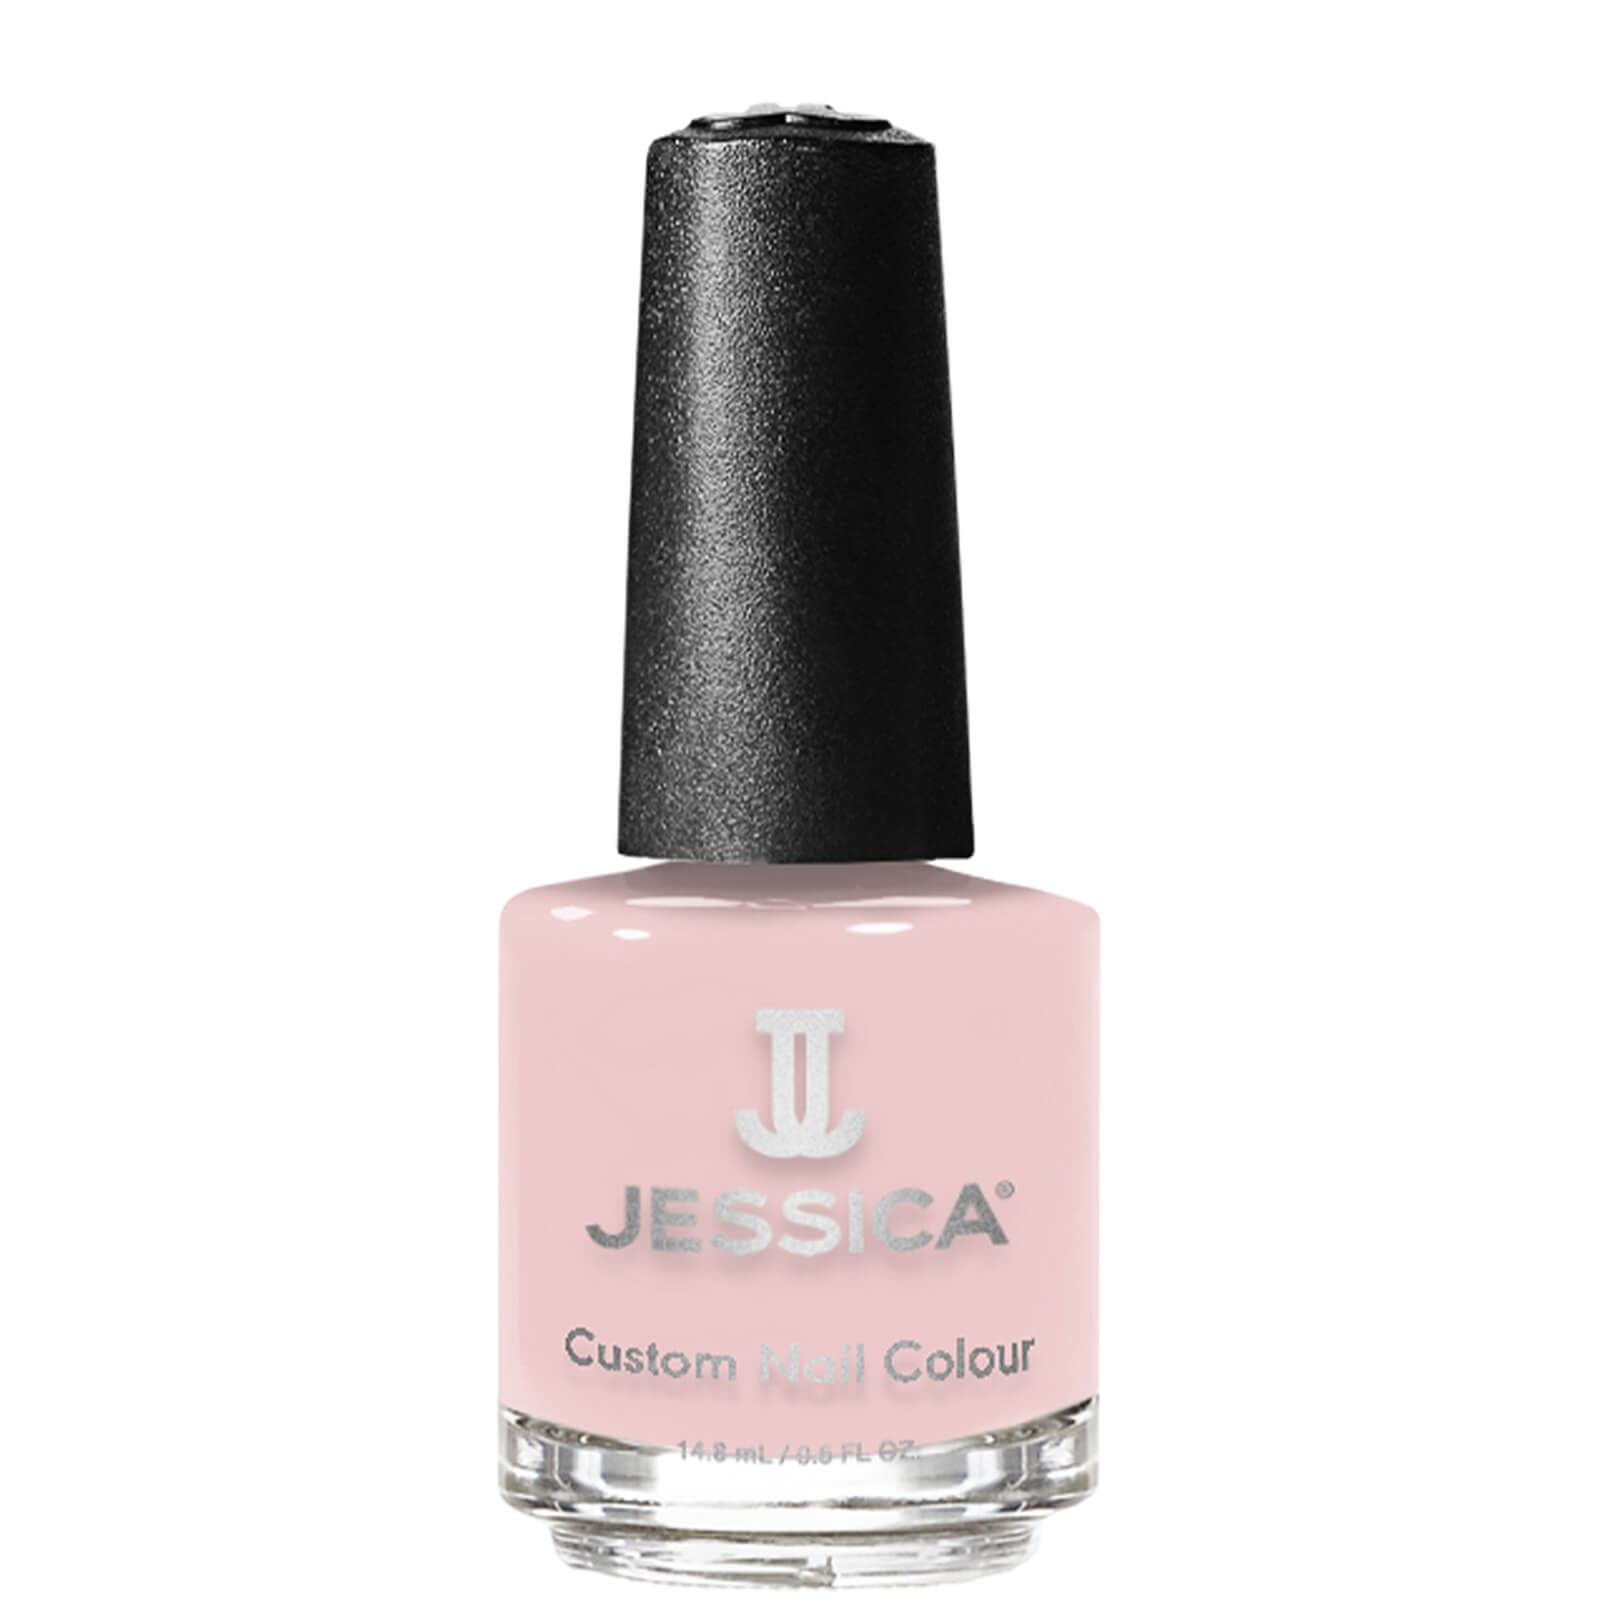 Esmalte de uñas Jessica Custom Colour 14.8ml (Varios tonos)